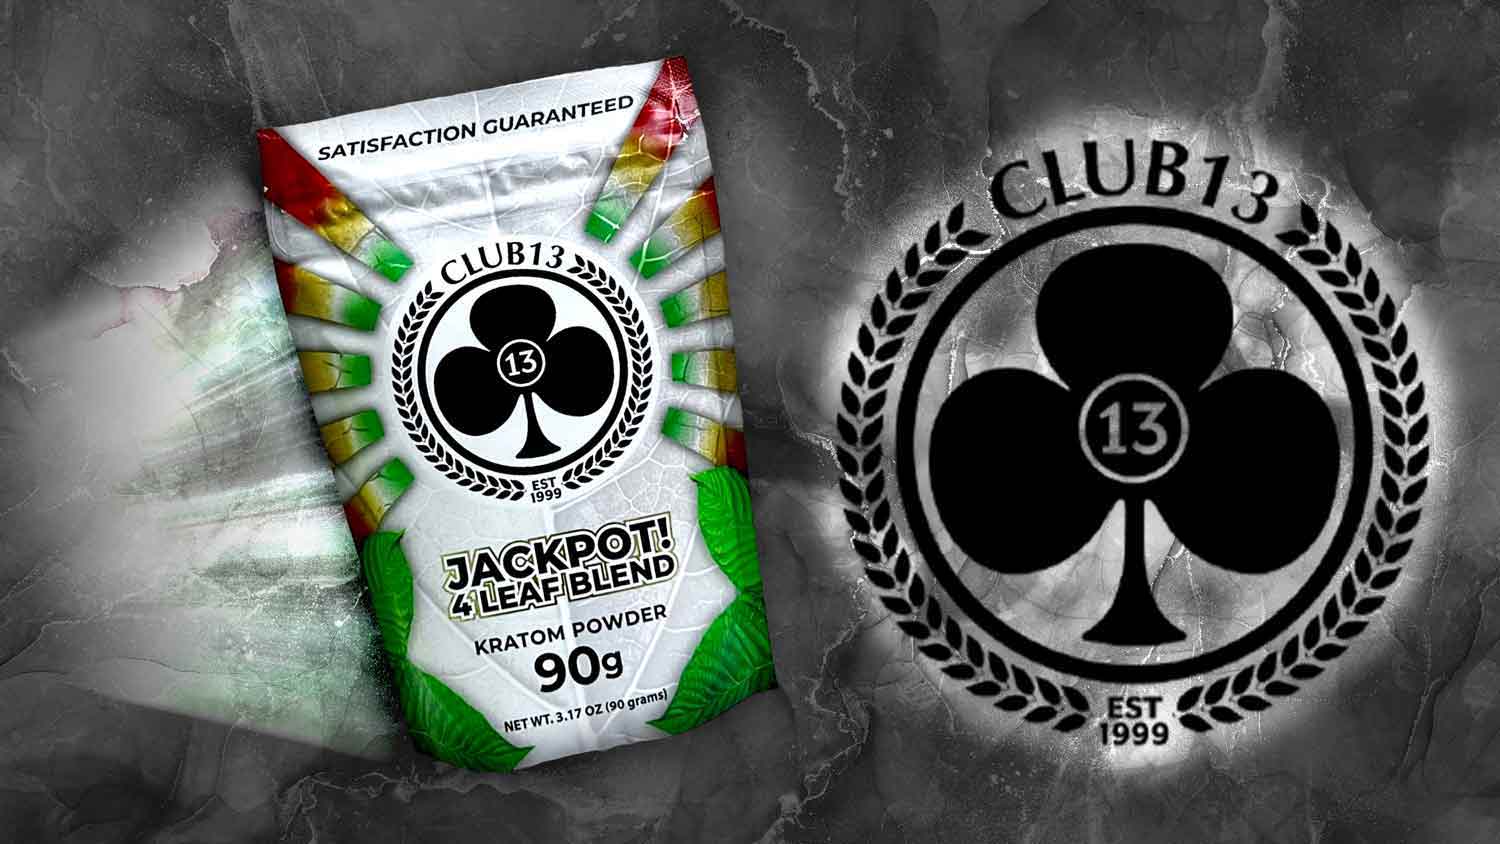  Club 13 Kratom Powder Jackpot 4 Leaf Blend